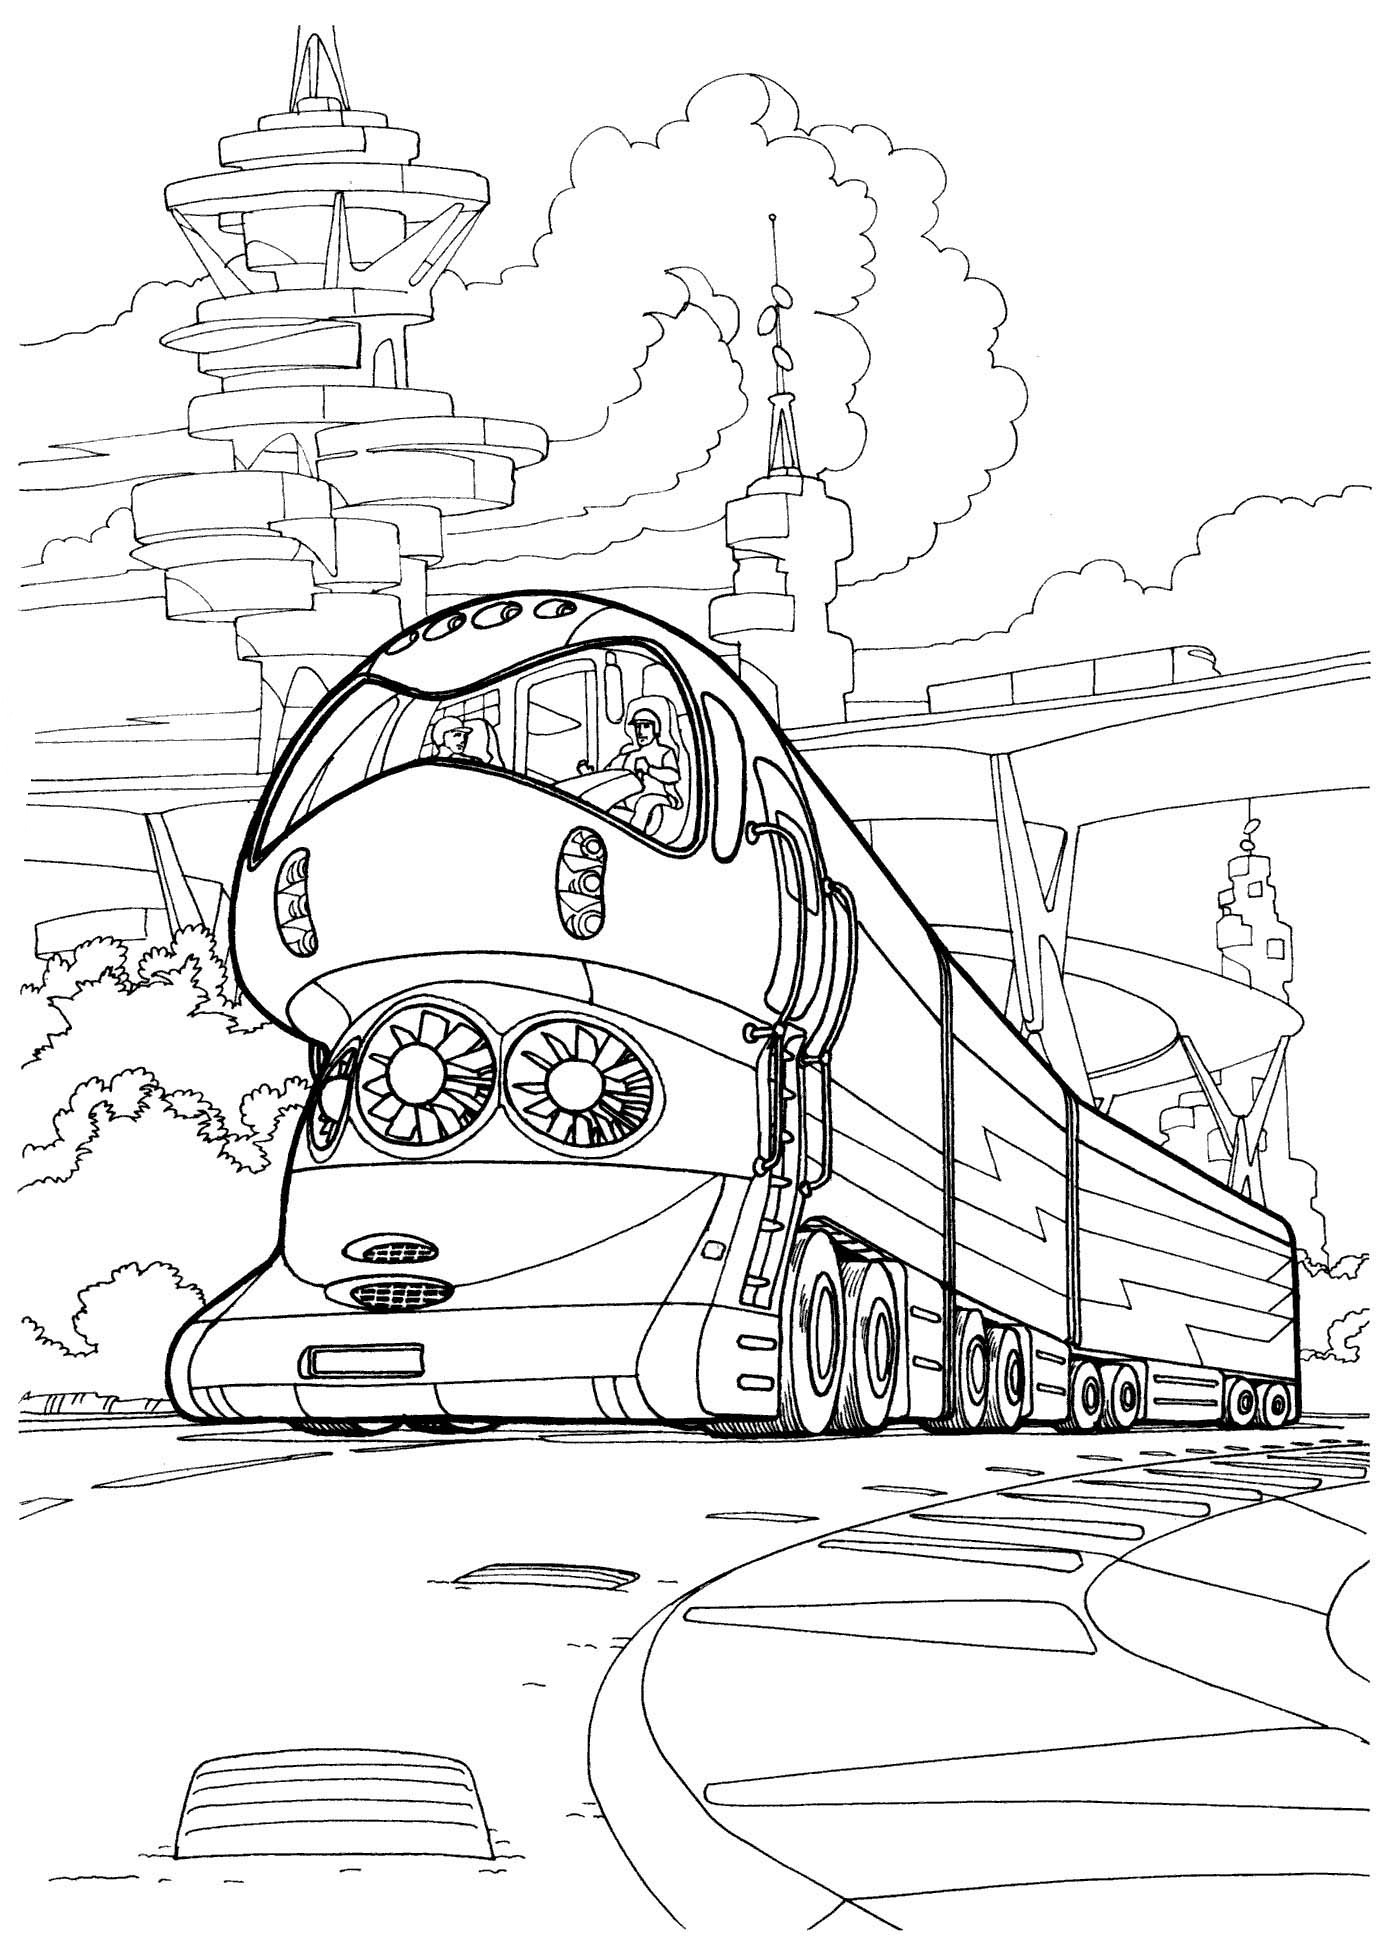 Train on wheels